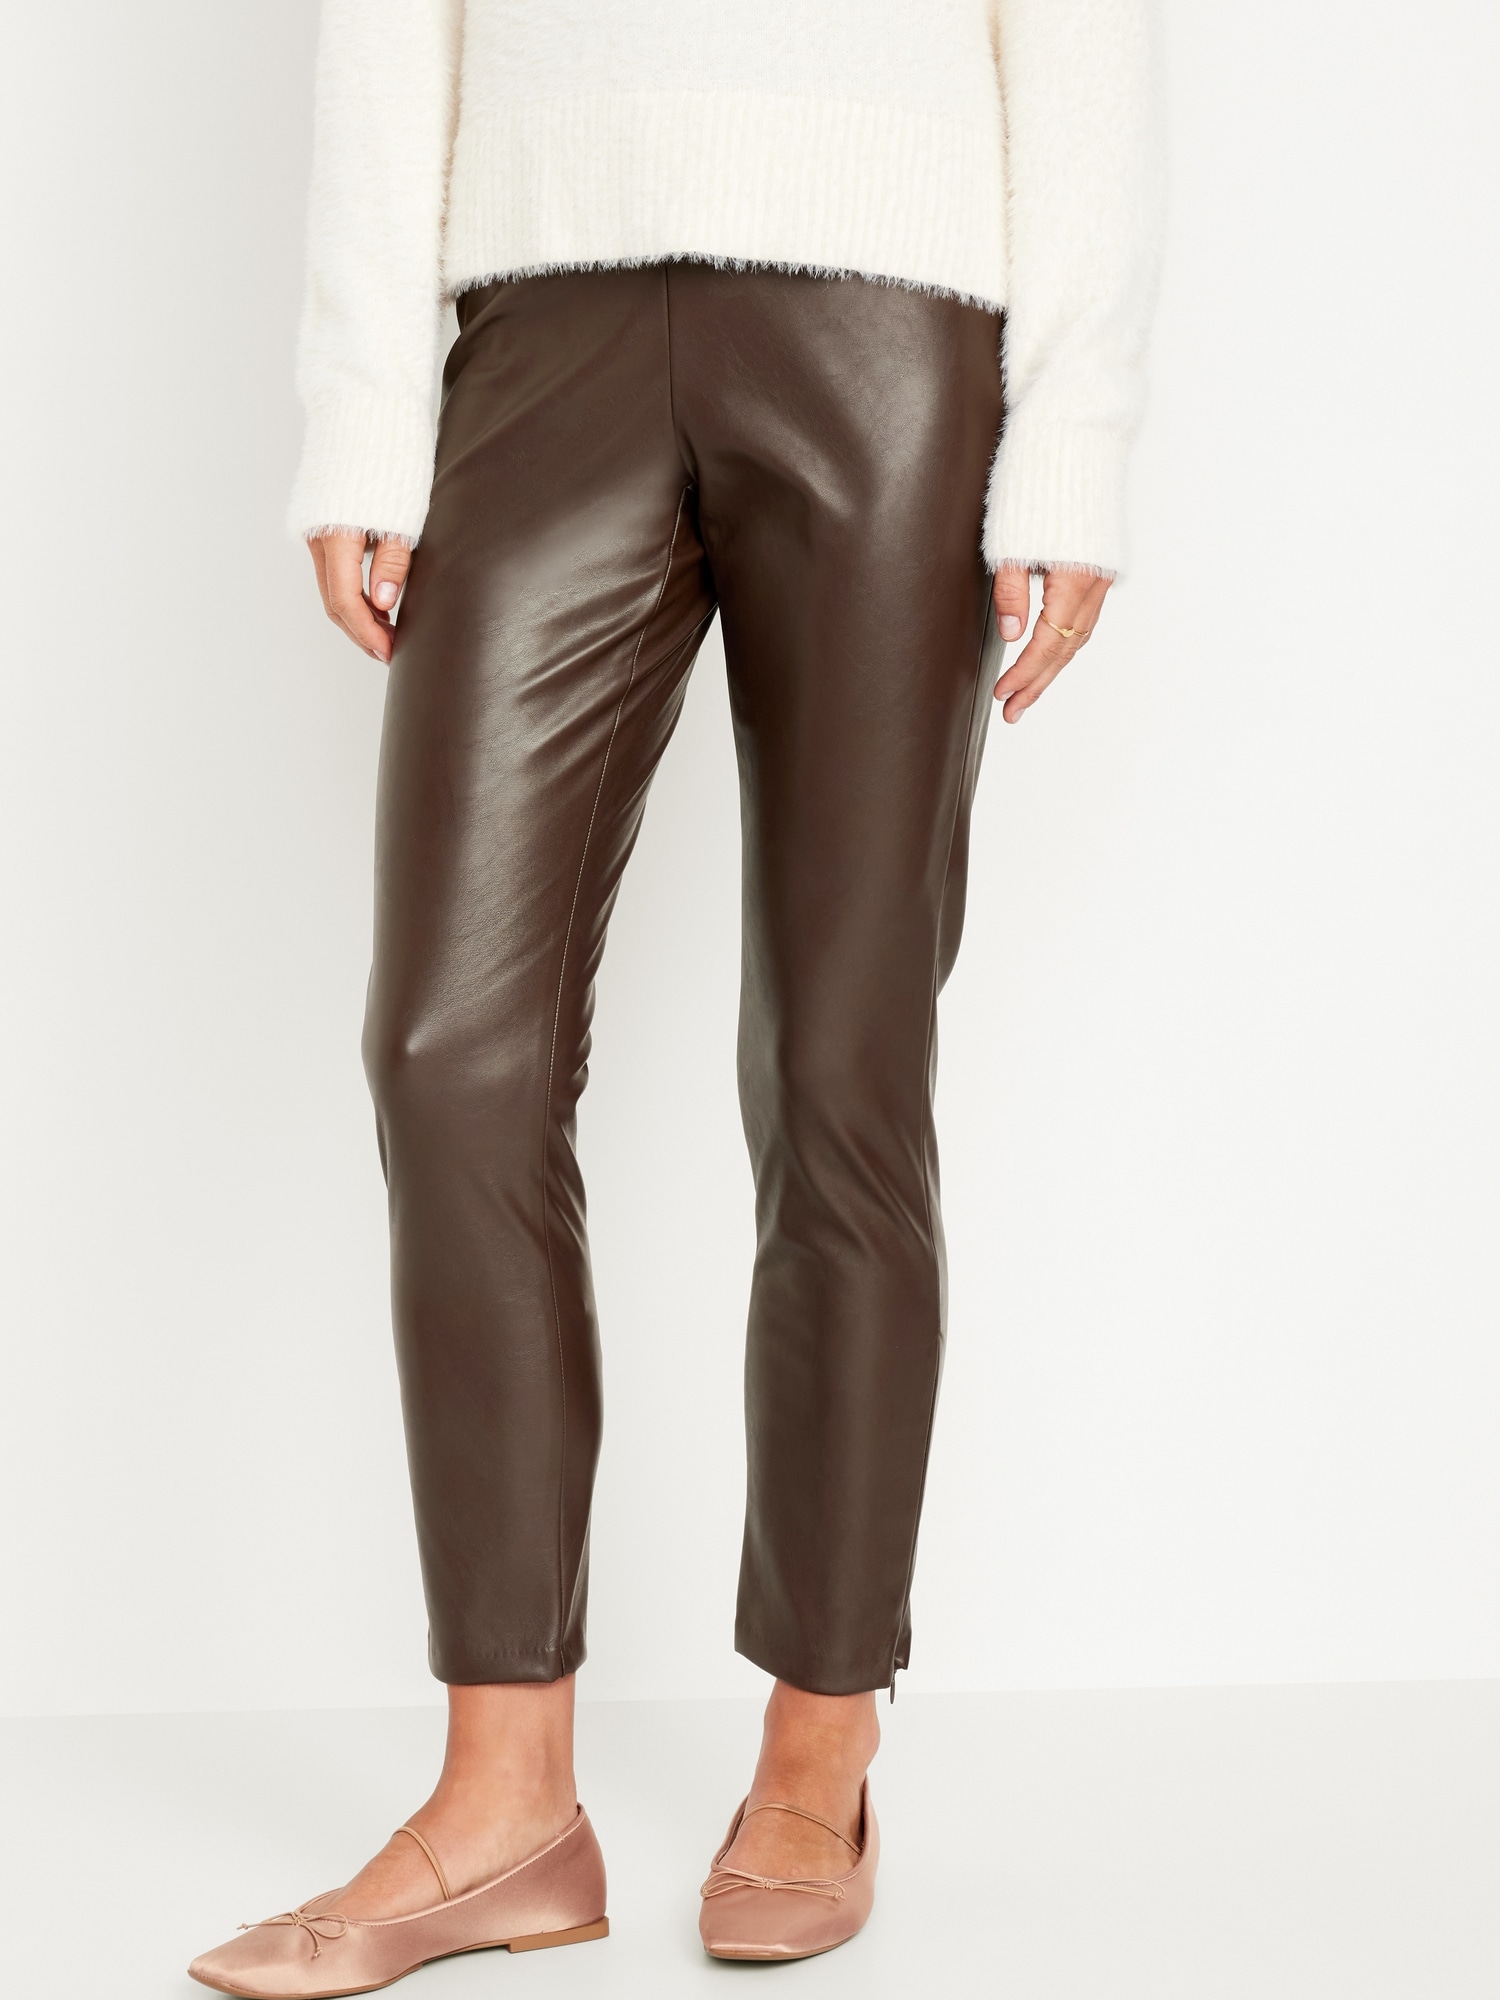 Petite Women's Leather Pants